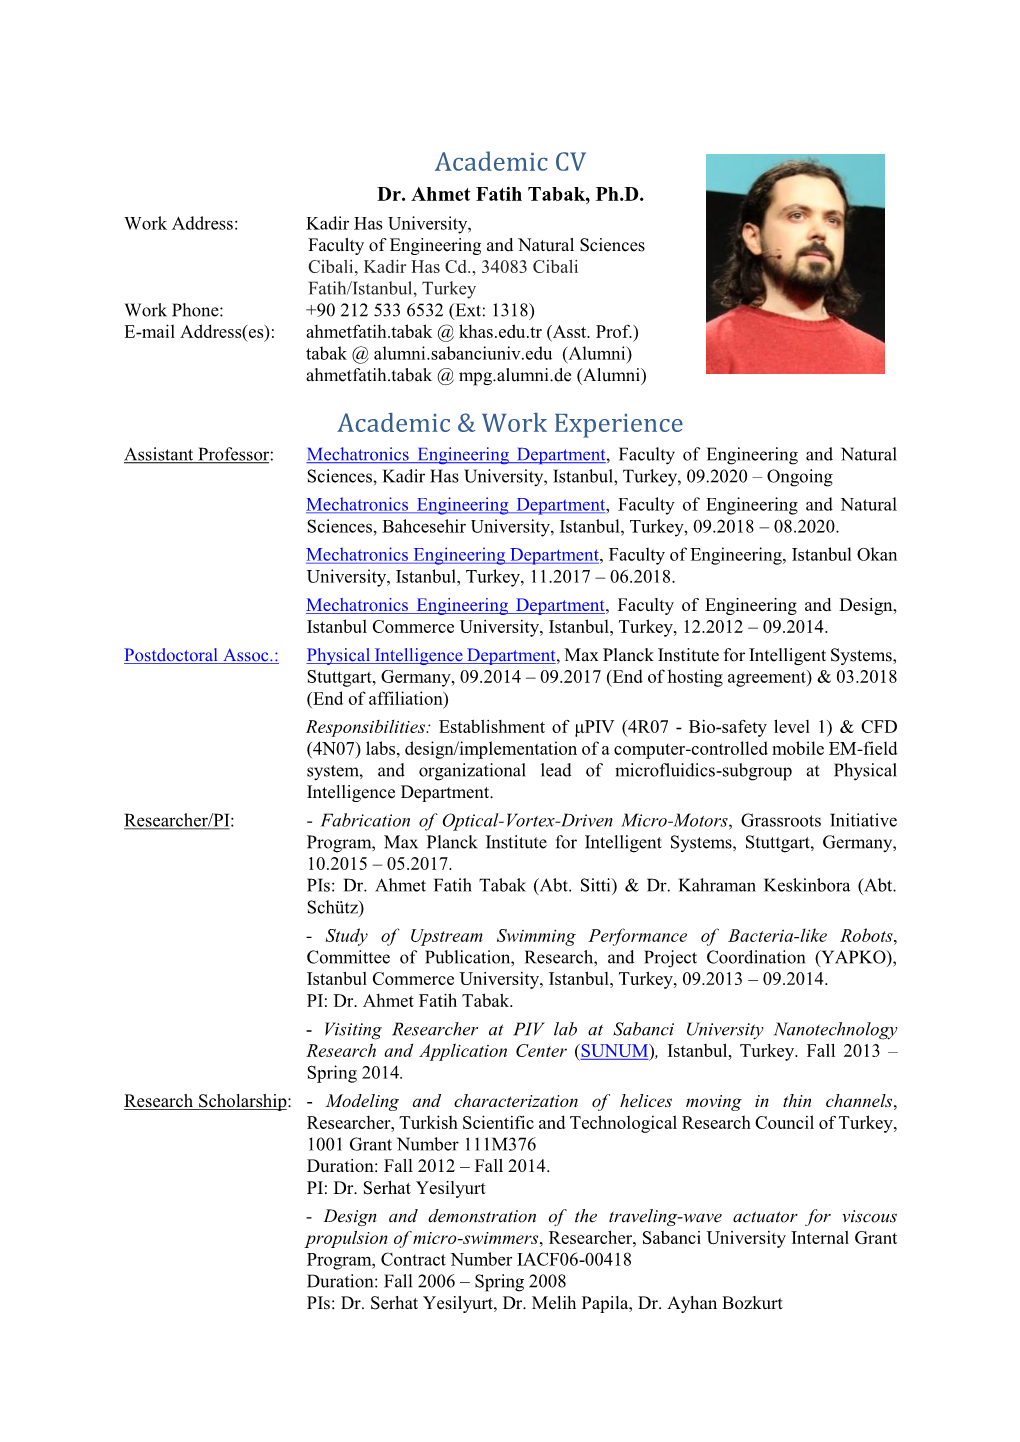 Academic CV Dr